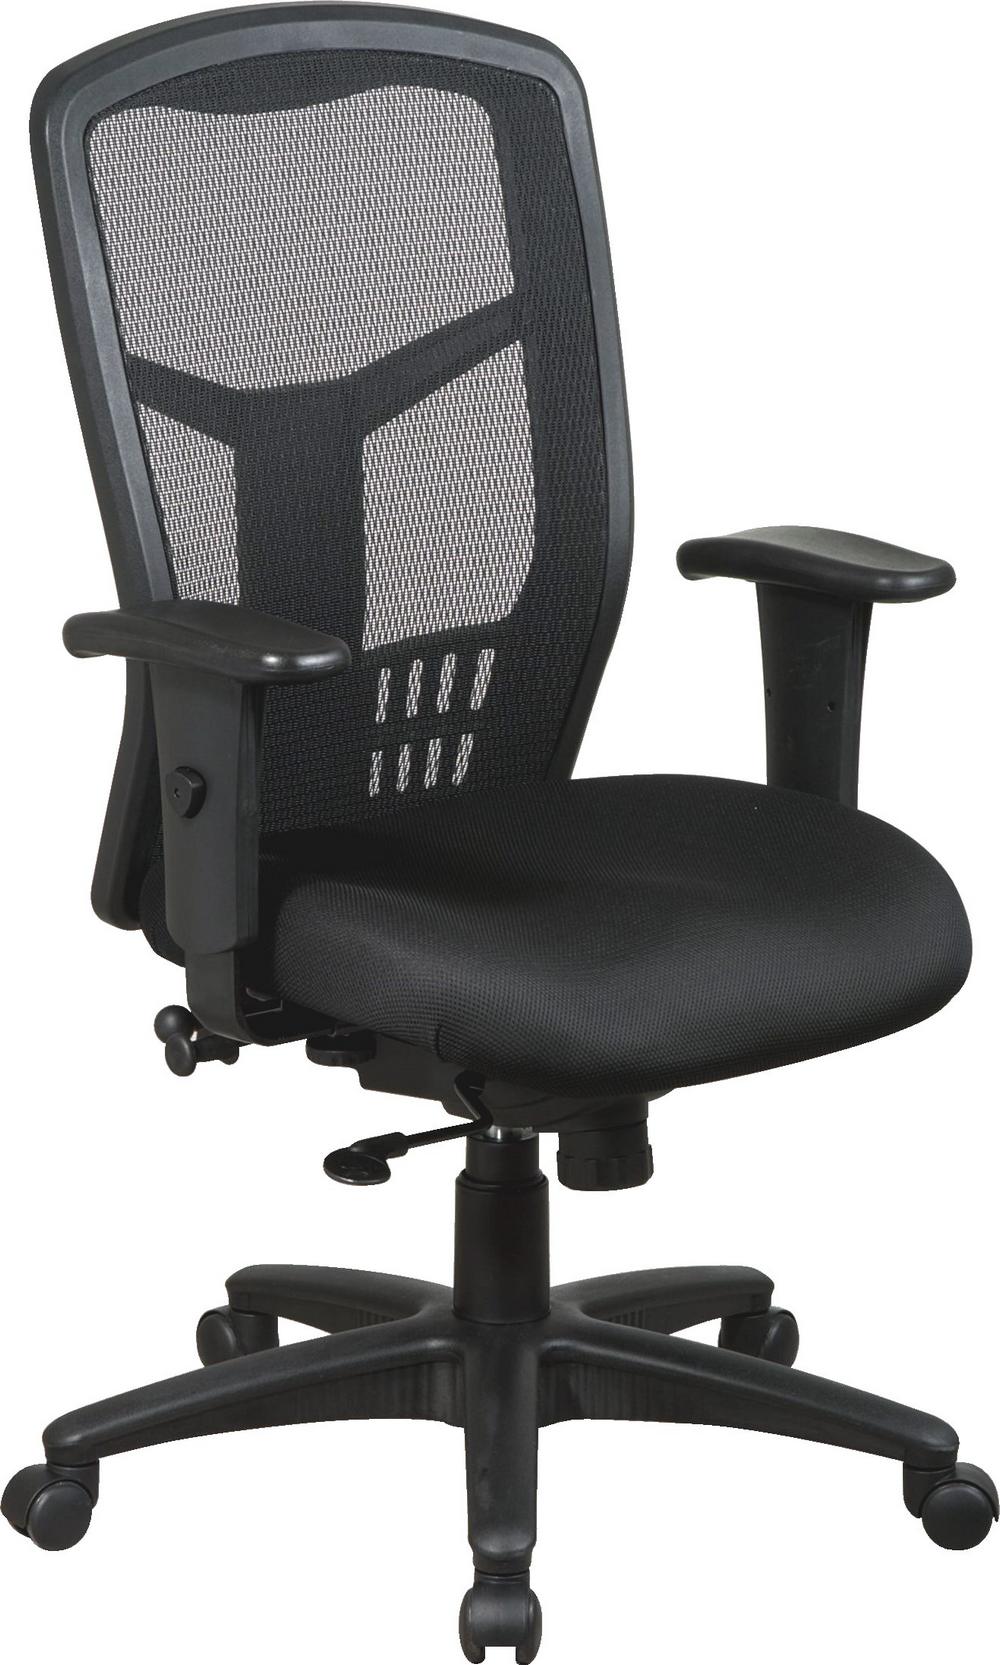 384 Black Mesh Adjustable Rolling Office Chair Es 3957 1 